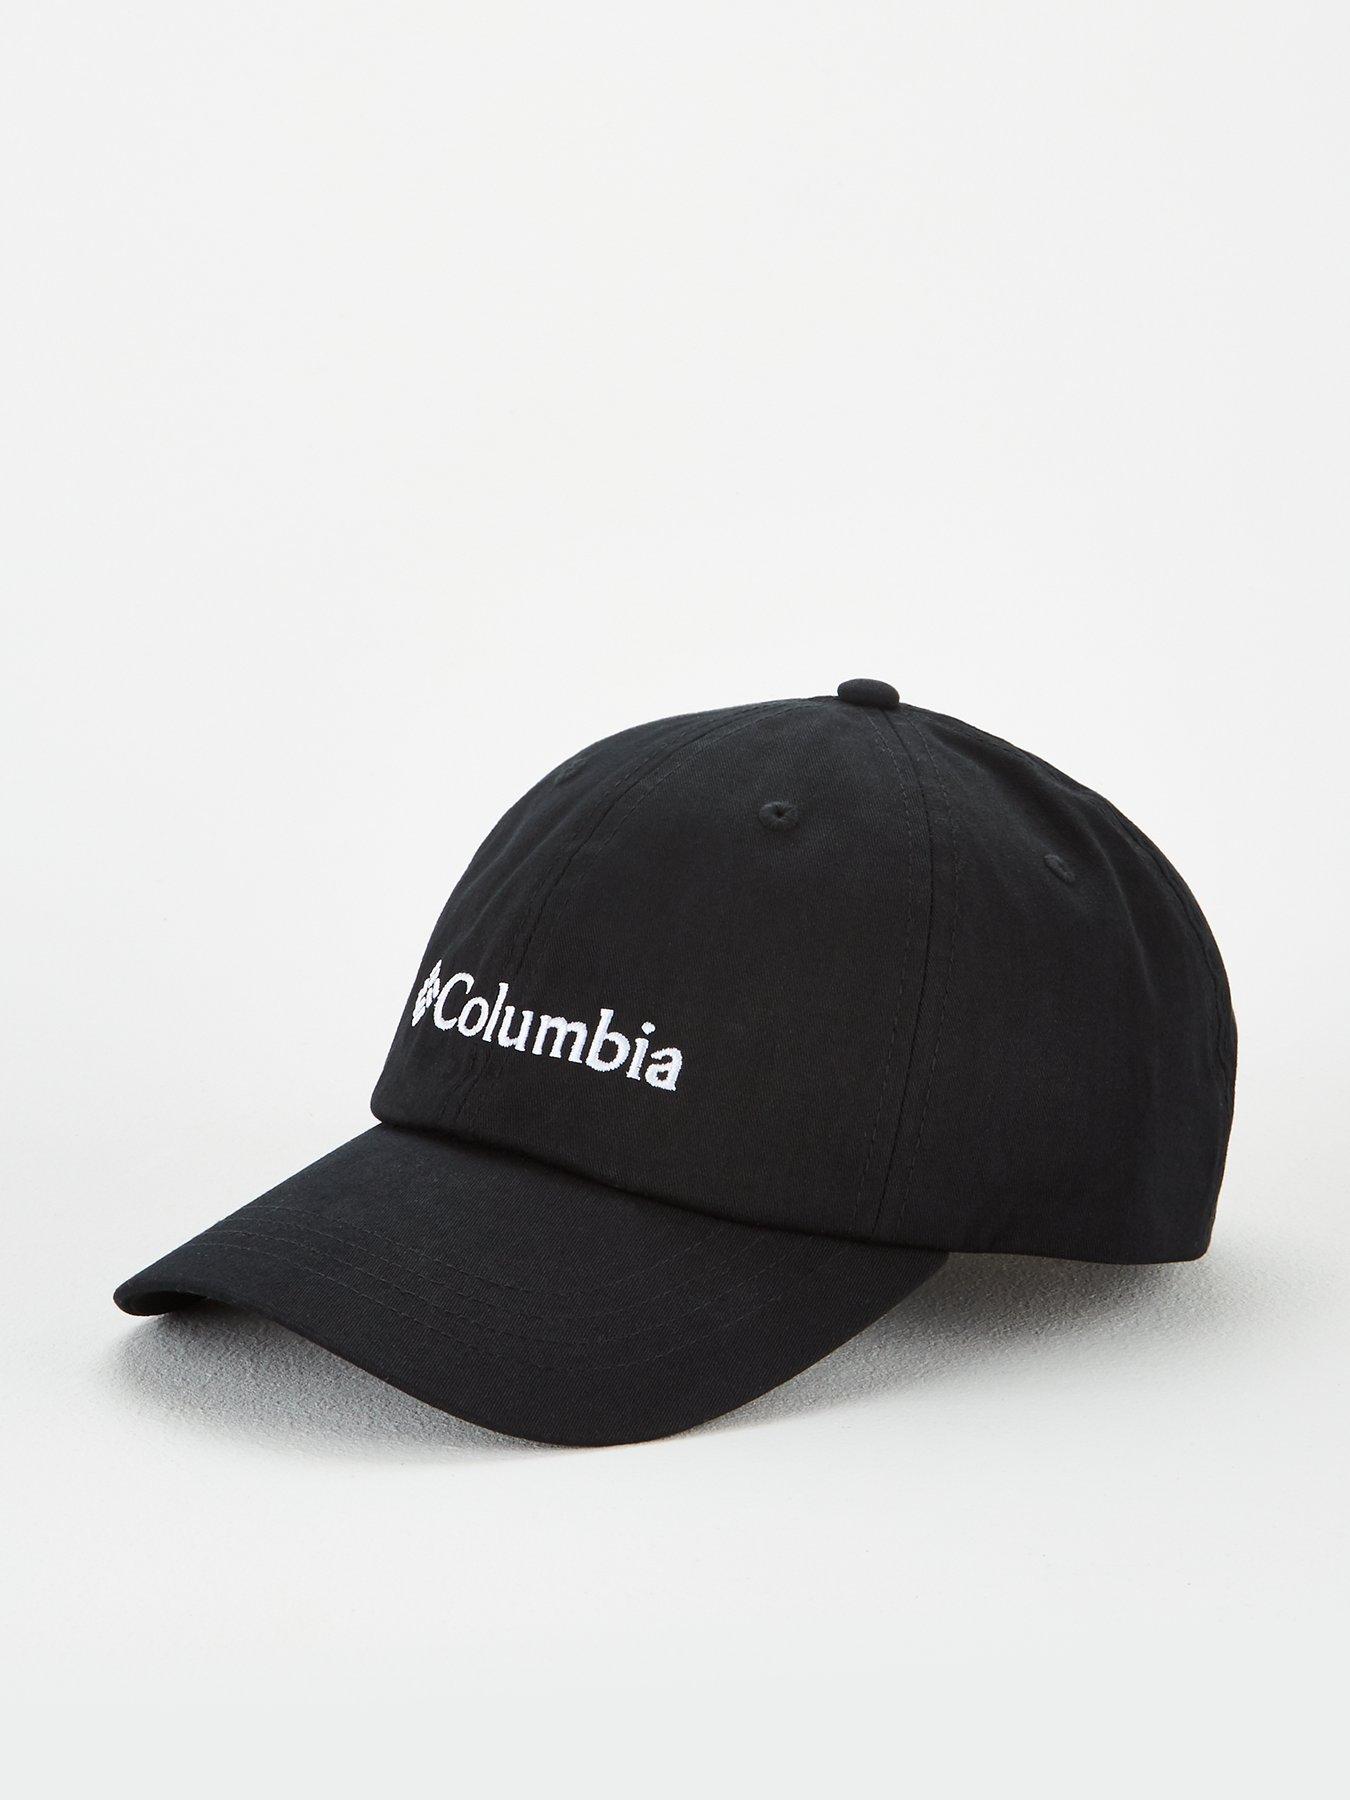 Columbia, Caps & hats, Accessories, Men